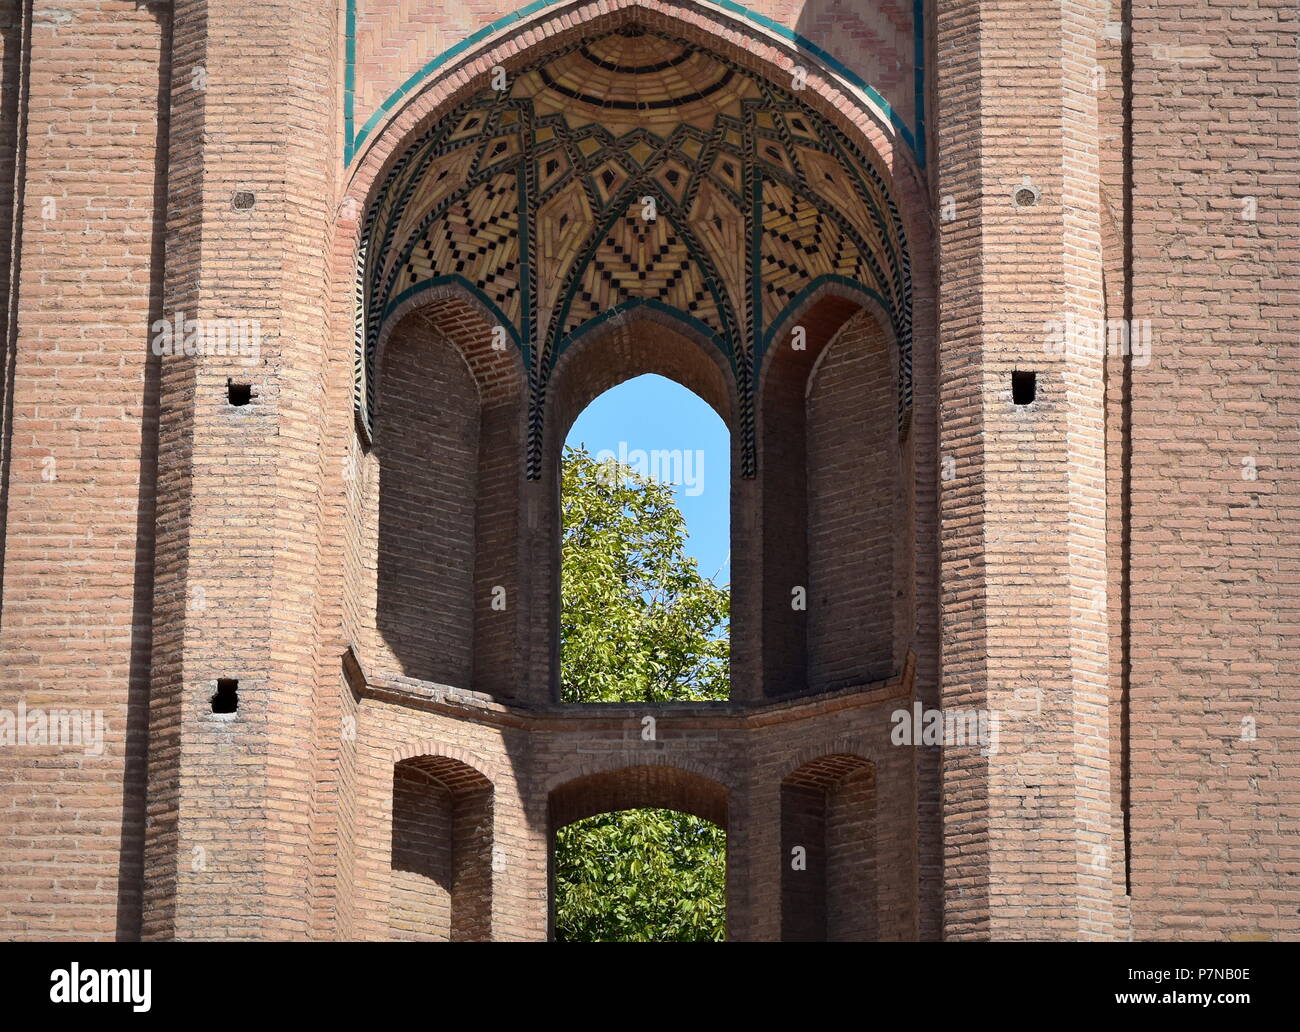 Islamic Iranian architecture window vault of historical Ali Qapu gate in Qazvin, Iran Stock Photo